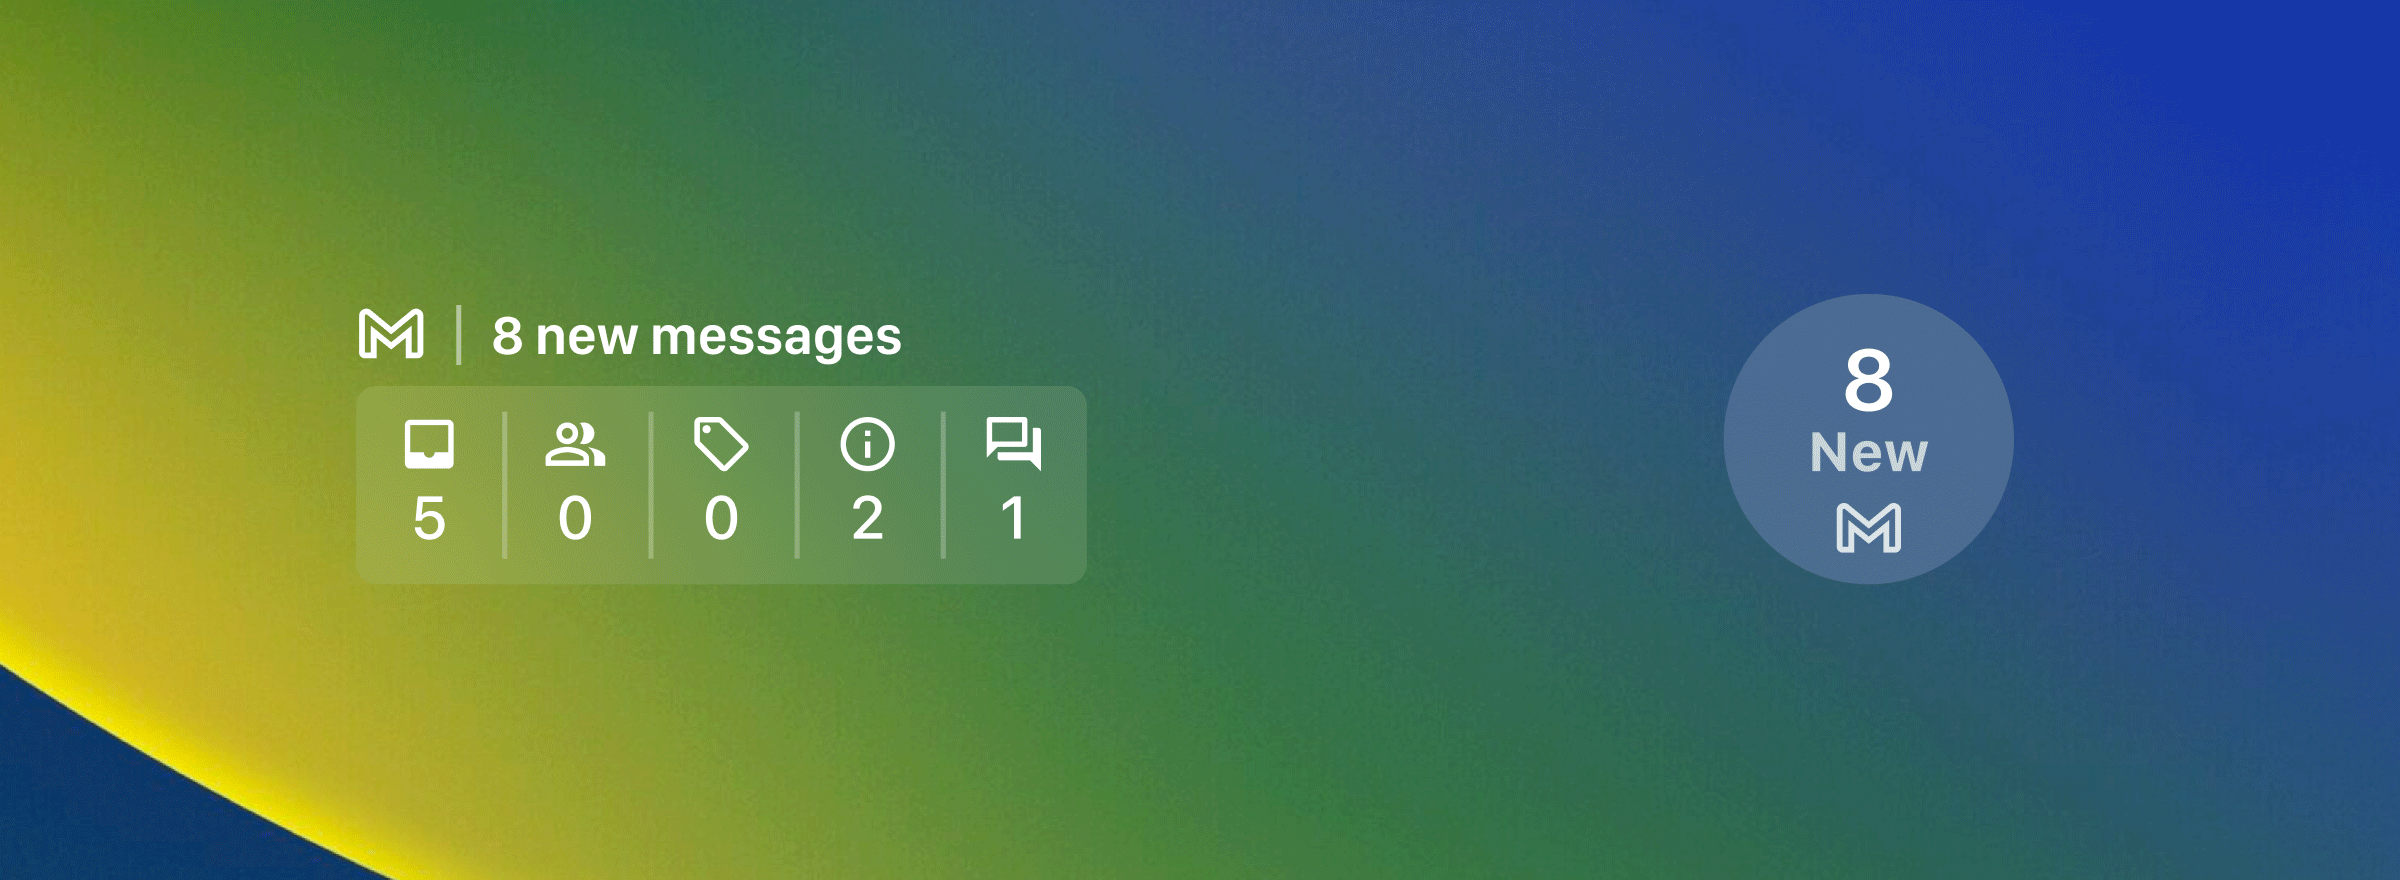 Gmail widgets for iOS 16